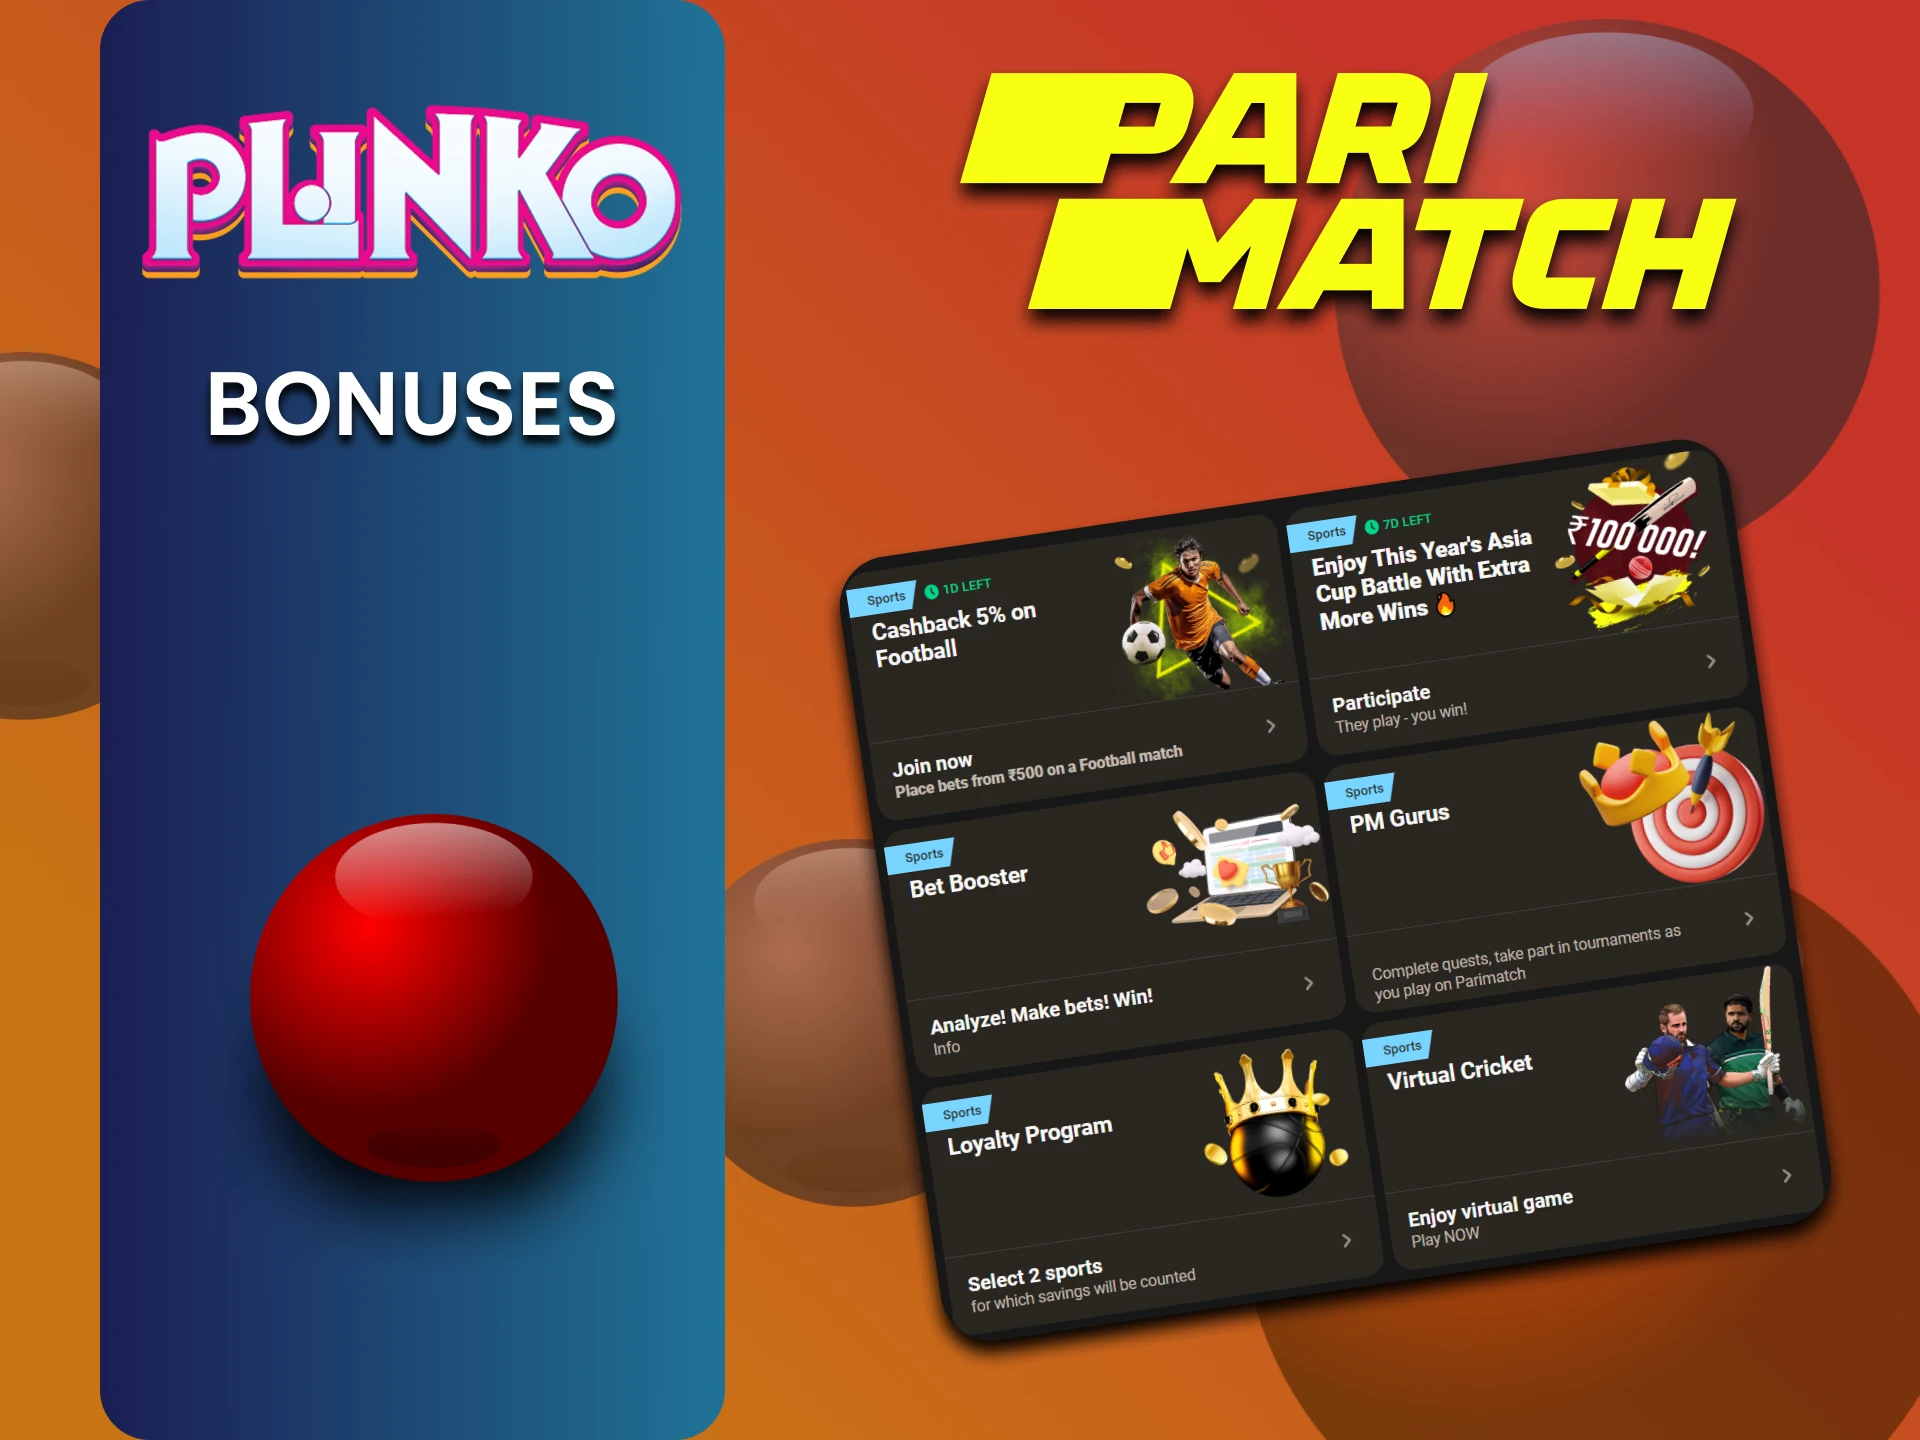 Parimatch gives bonuses to Plinko players.